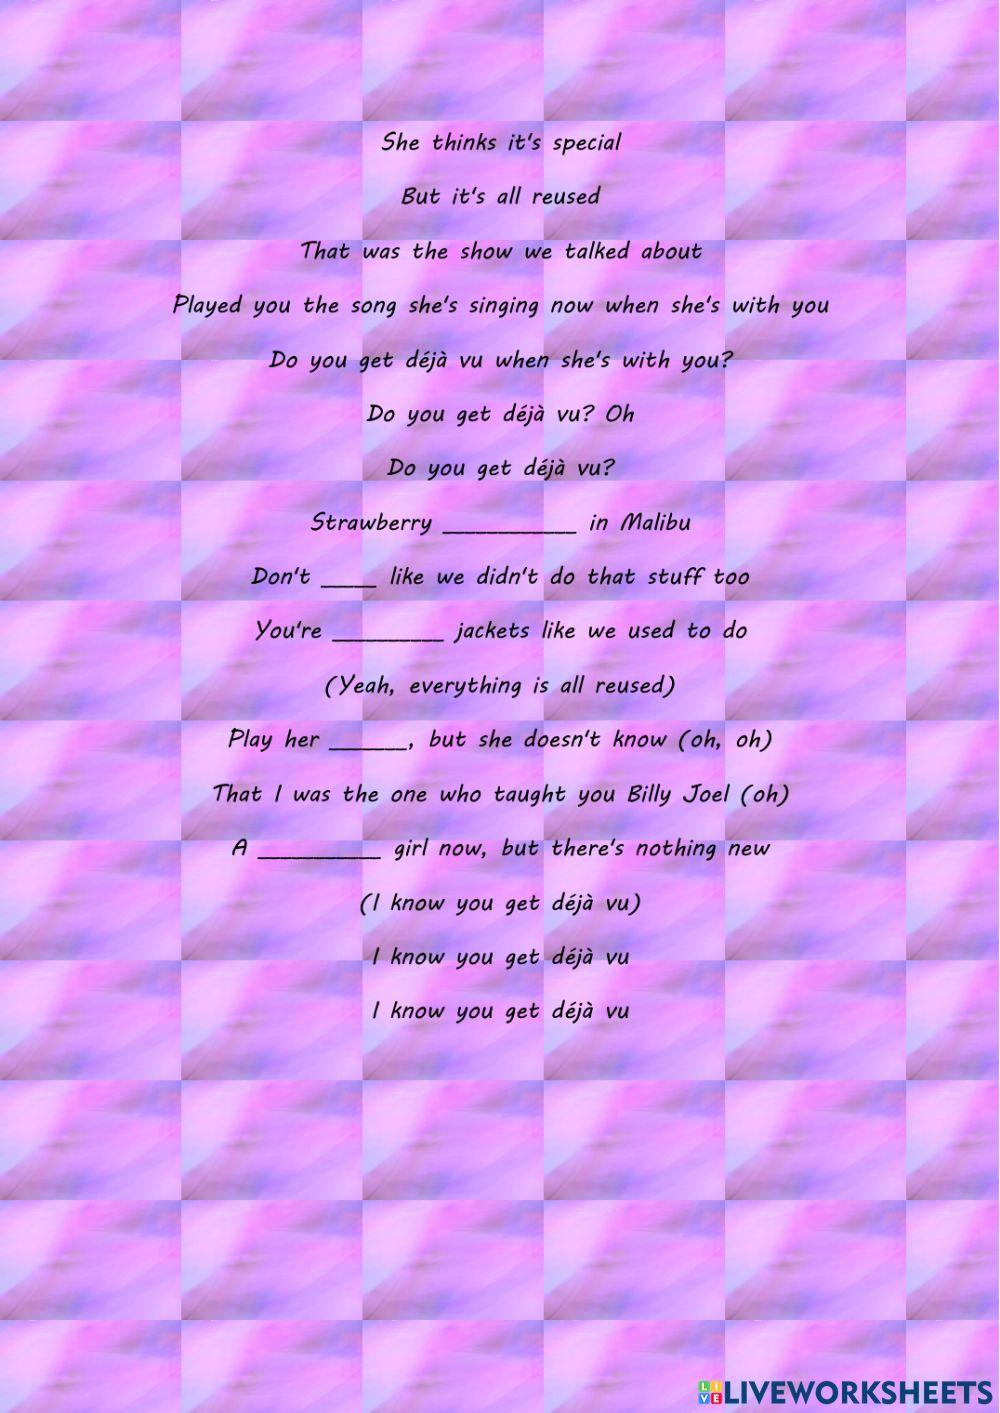 Deja vu by Olivia Rodrigo (complete the lyrics)